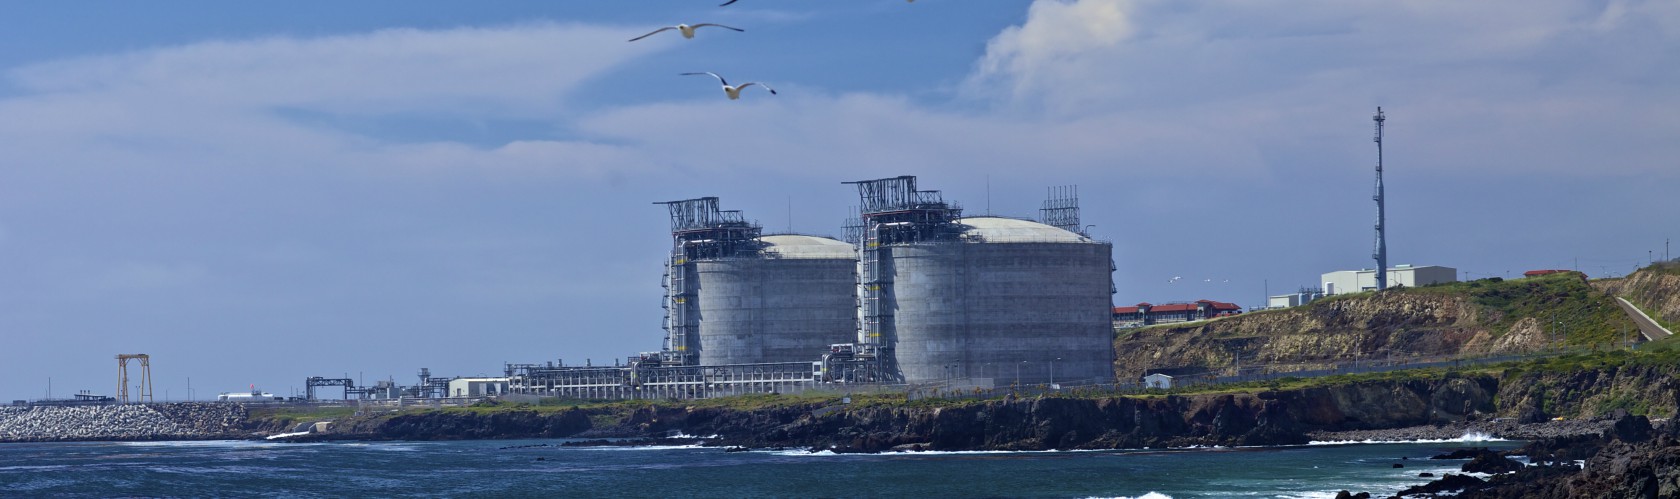 Sempra LNG’s and IEnova’s proposed Energía Costa Azul (ECA) LNG export development project in Baja California, Mexico 